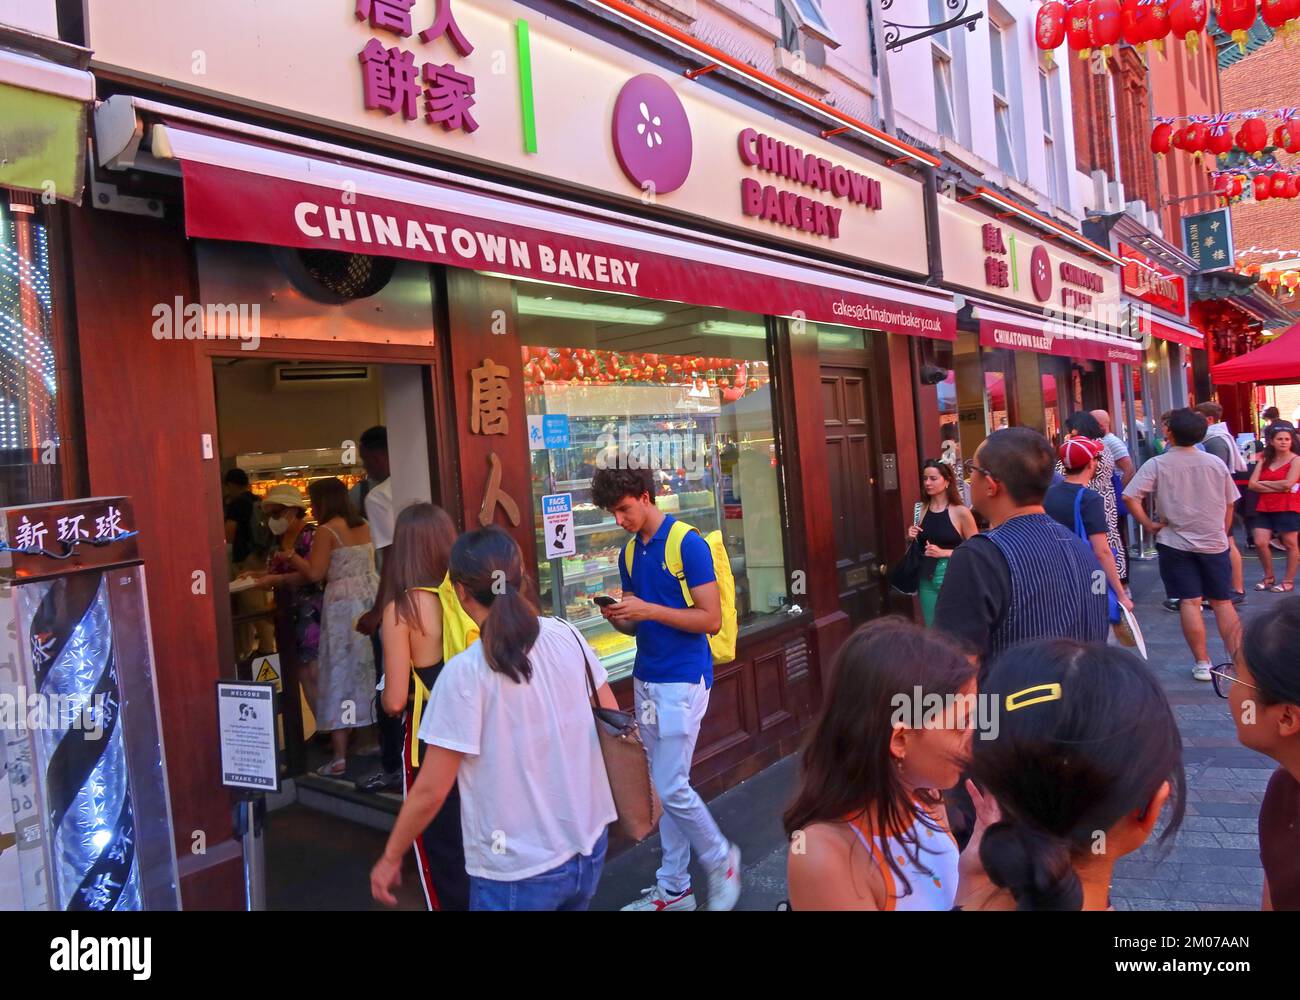 Chinatown Bakery, Gerrard St, SOHO, London, England, UK,  W1D 5PT Stock Photo